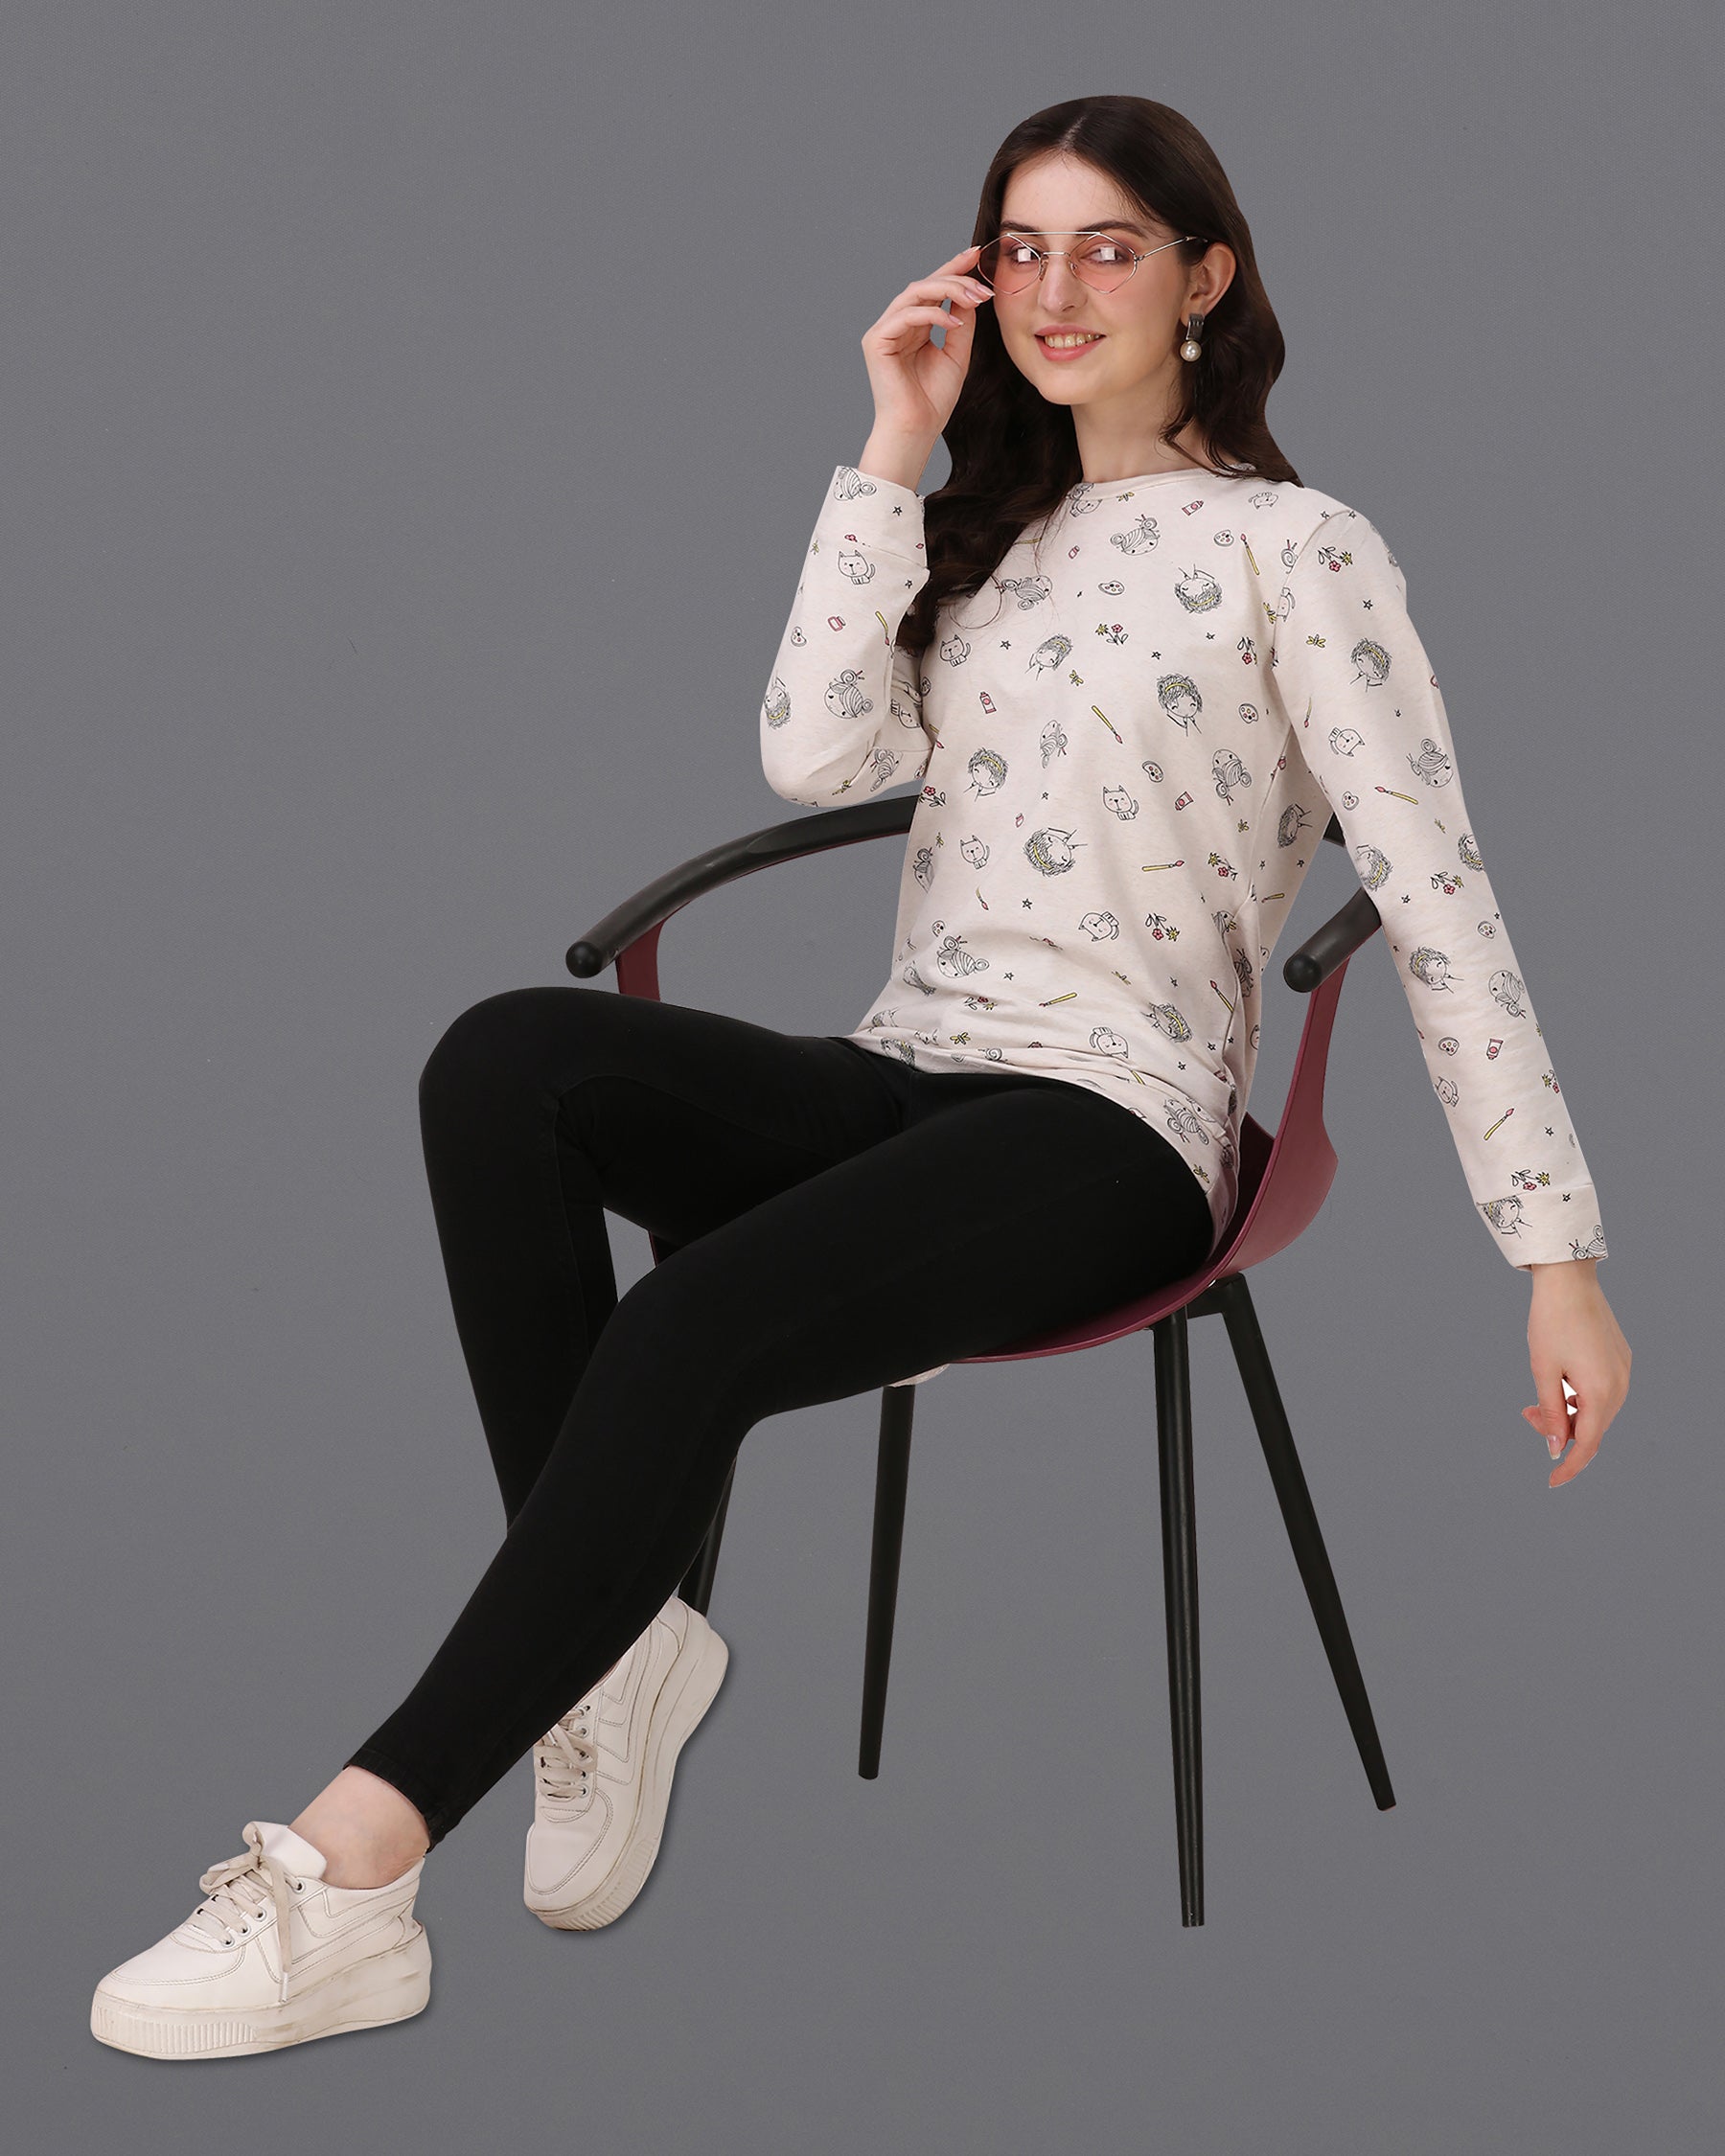 Bianca Cream Quirky Printed Premium Cotton Jersey Sweatshirt WTP046-32, WTP046-34, WTP046-36, WTP046-38, WTP046-40, WTP046-42